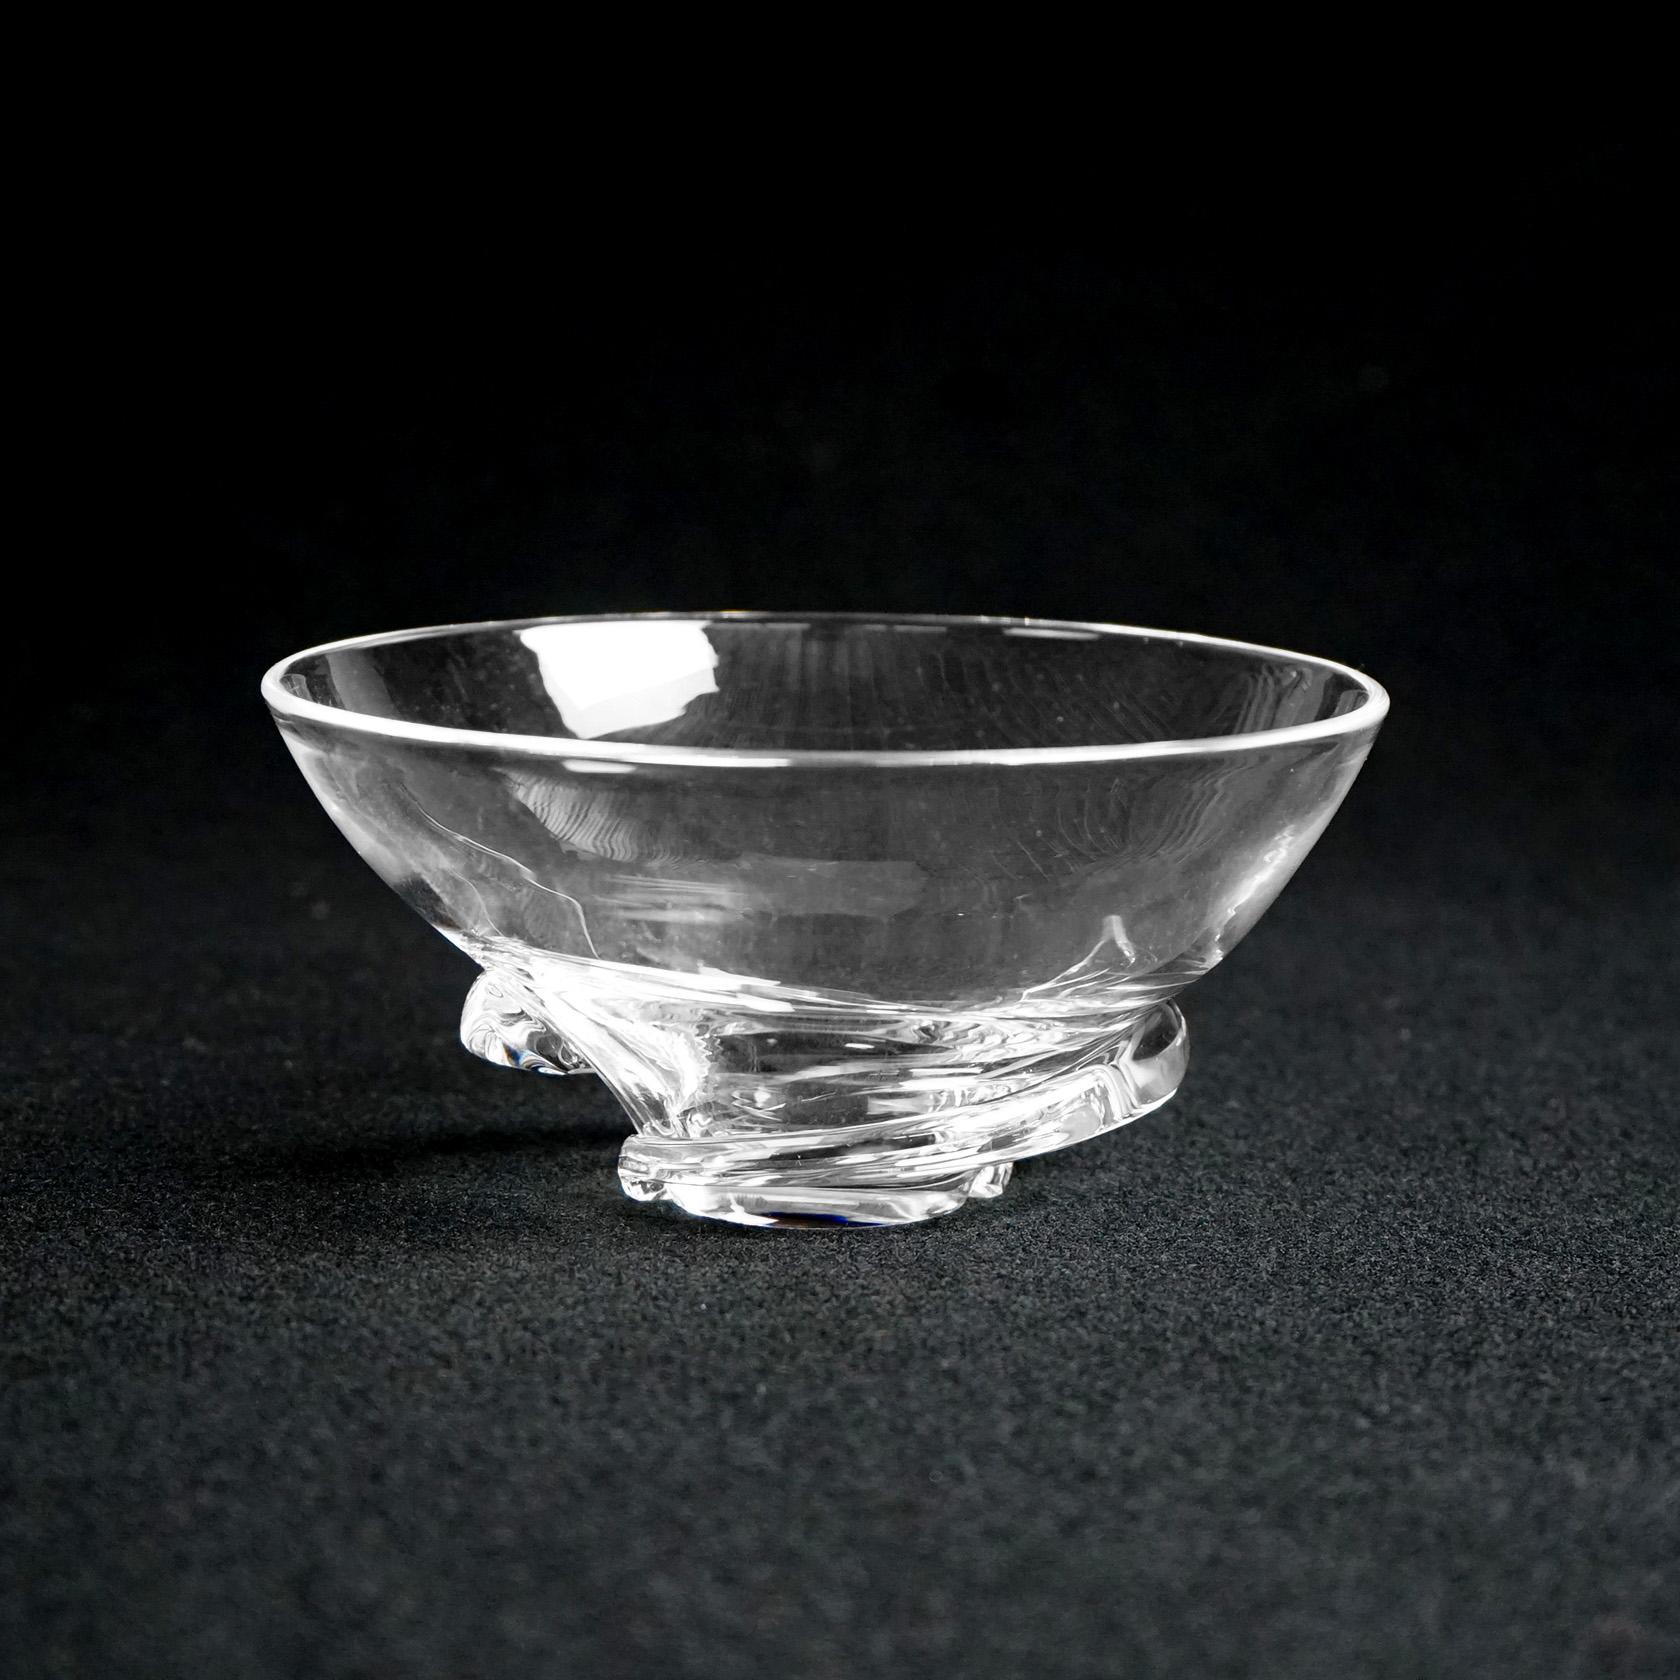 Mid Century Modern Steuben Art Glass Swirl Footed Crystal Bowl, signiert,  20. Jahrhundert

Maße - 7 